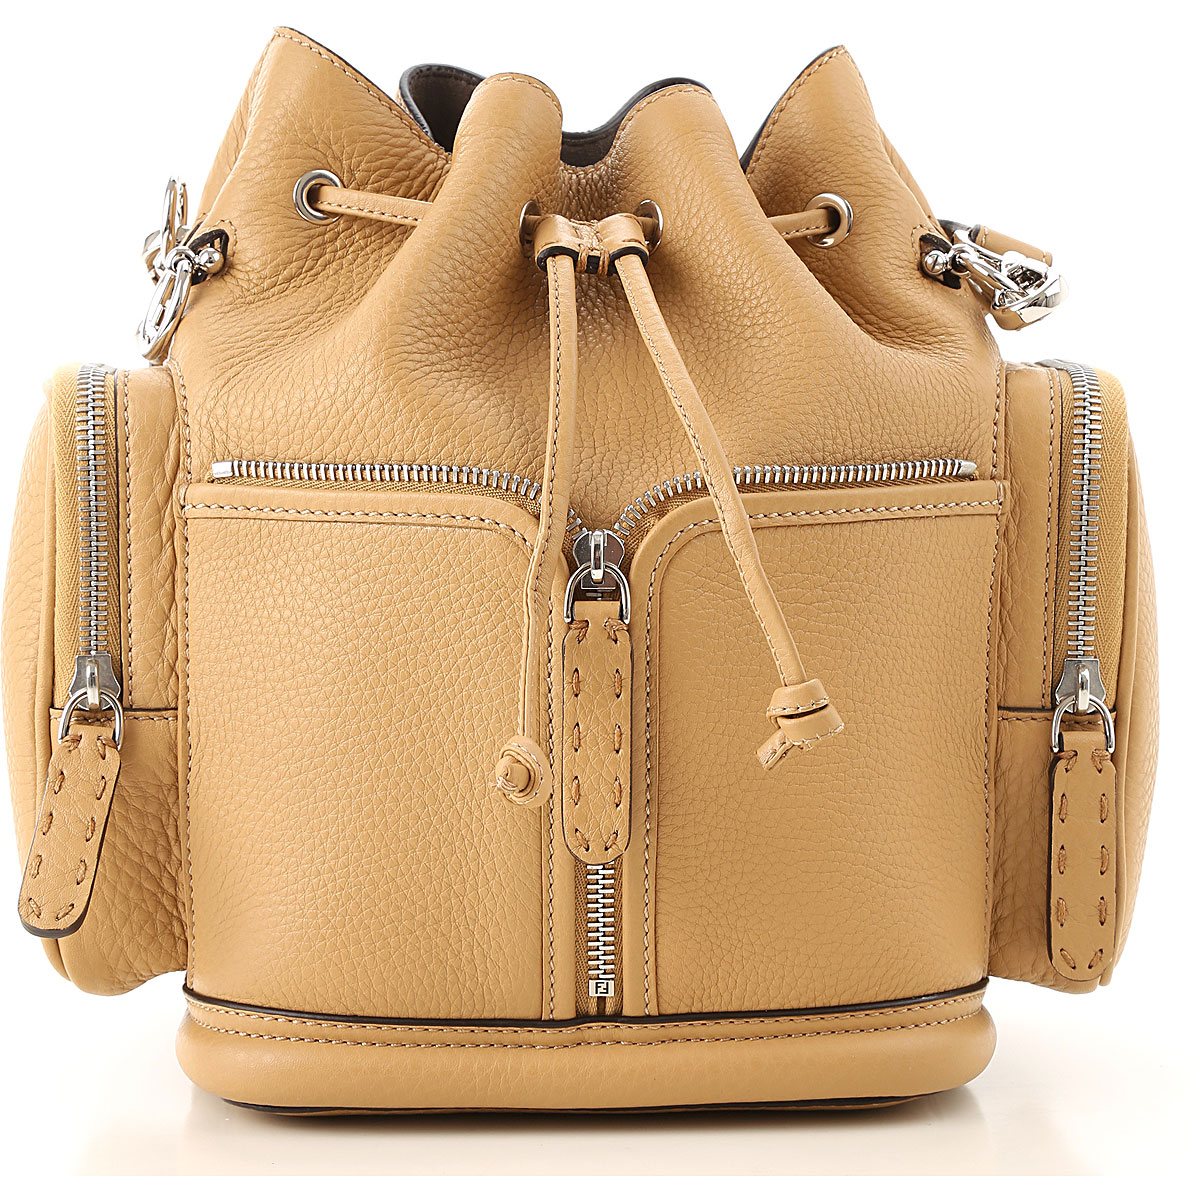 Handbags Fendi, Style code: 8bt301-ndu-f15w8